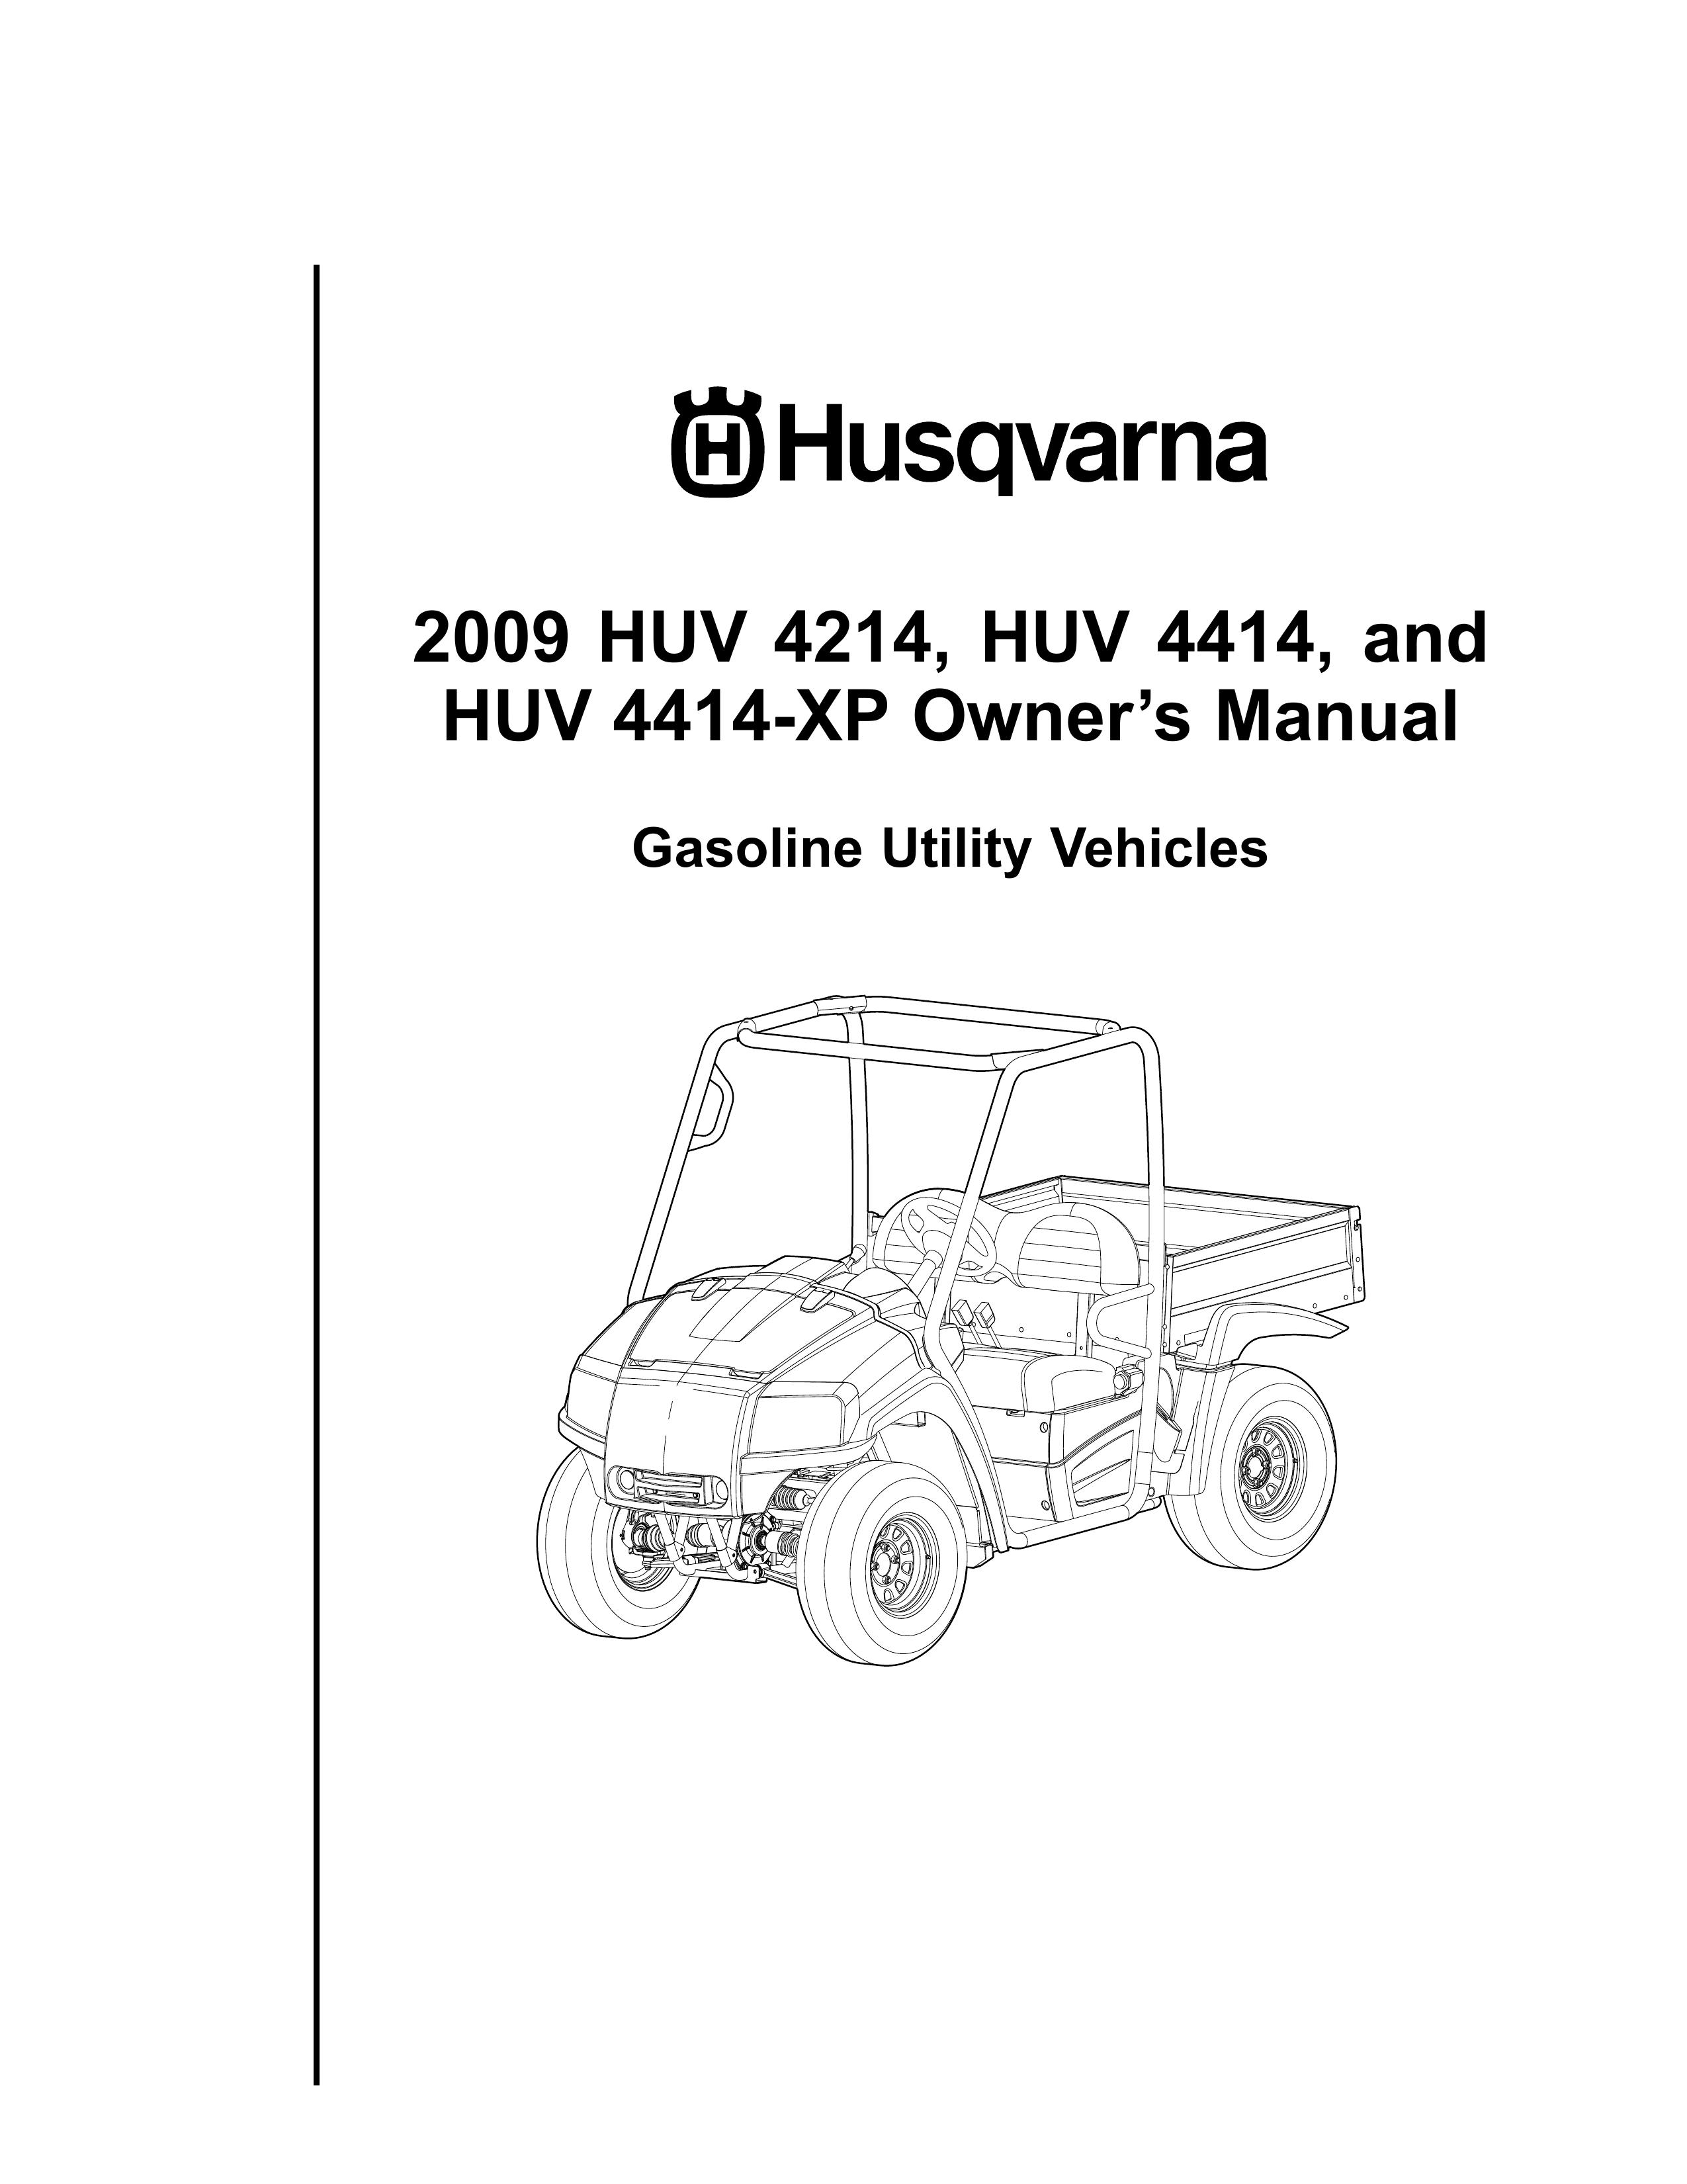 Husqvarna HUV 4414 Utility Vehicle User Manual